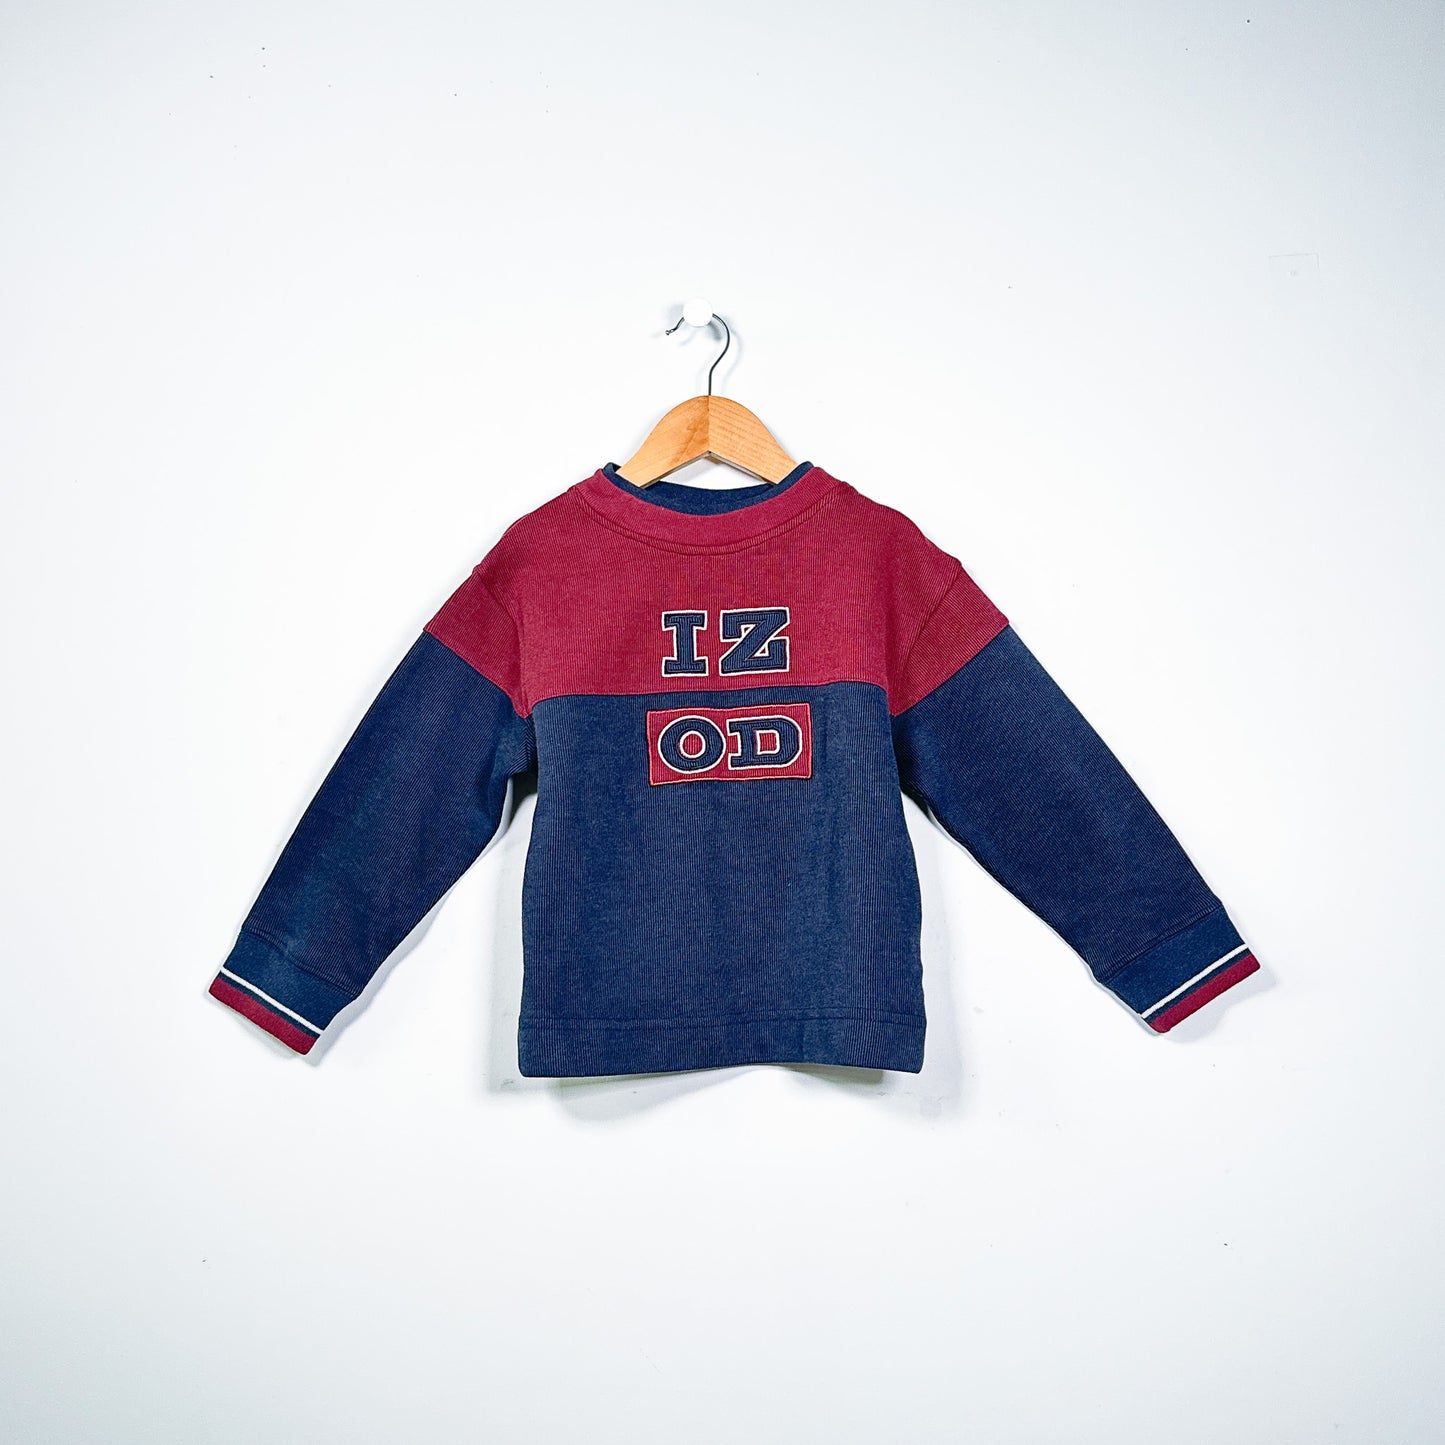 Vintage Kids IZOD Embroidered Sweatshirt - Size 4-5yr